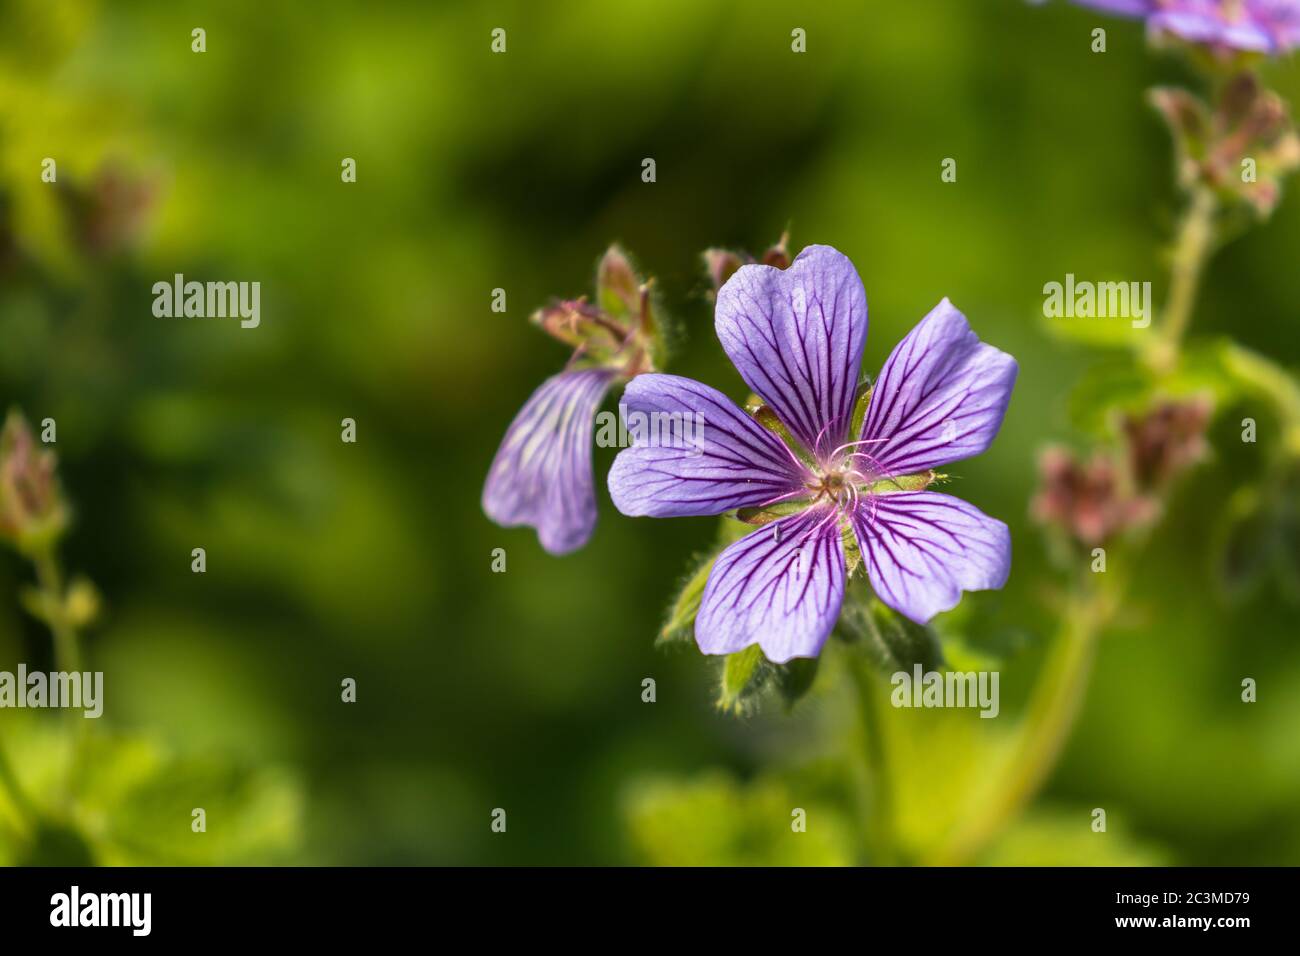 Close up view of glandular crane's-bill (Geranium platypetalum), small purple flower, copy space available Stock Photo